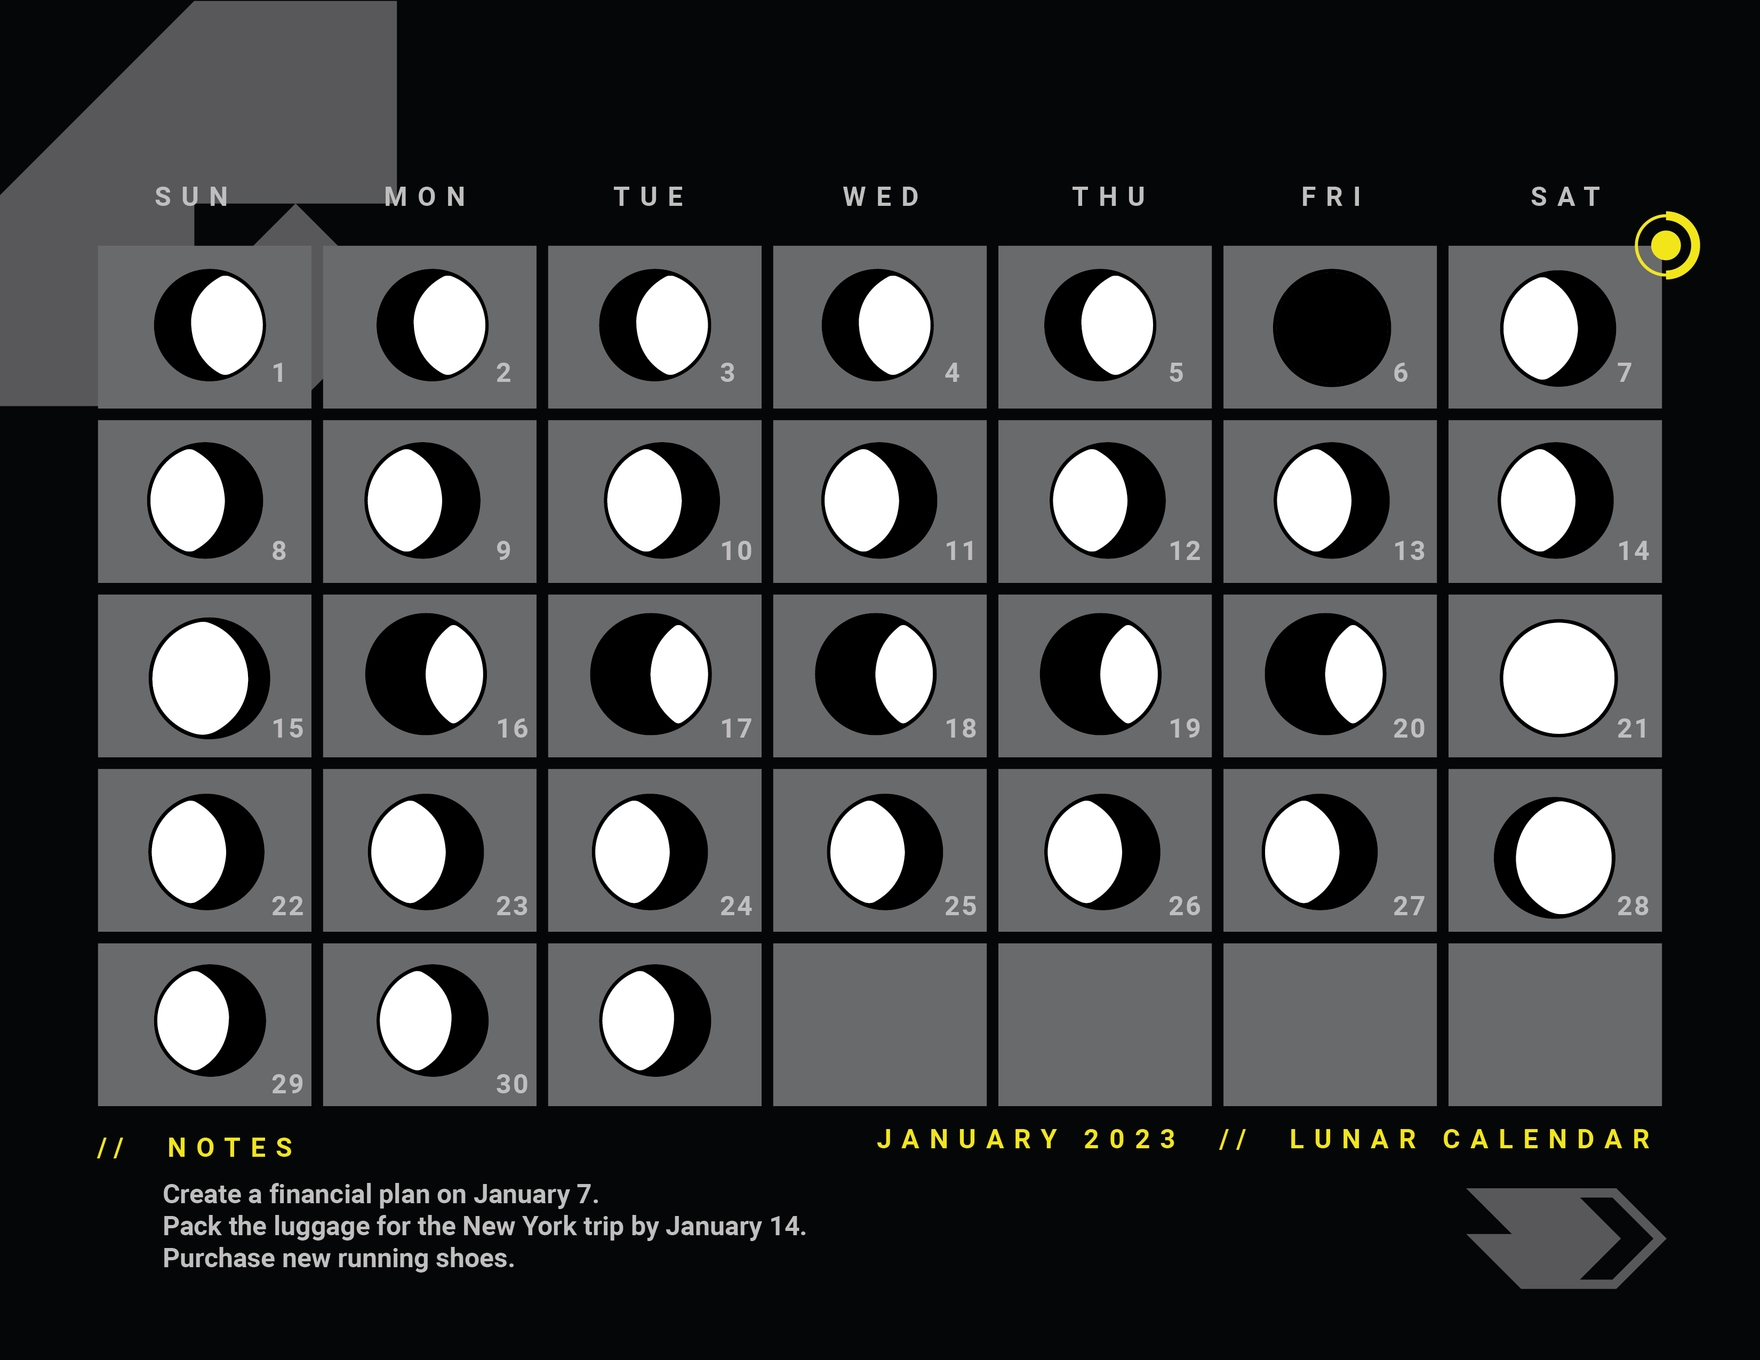 Free Lunar Calendar January 2023 Download In Word Illustrator PSD Template